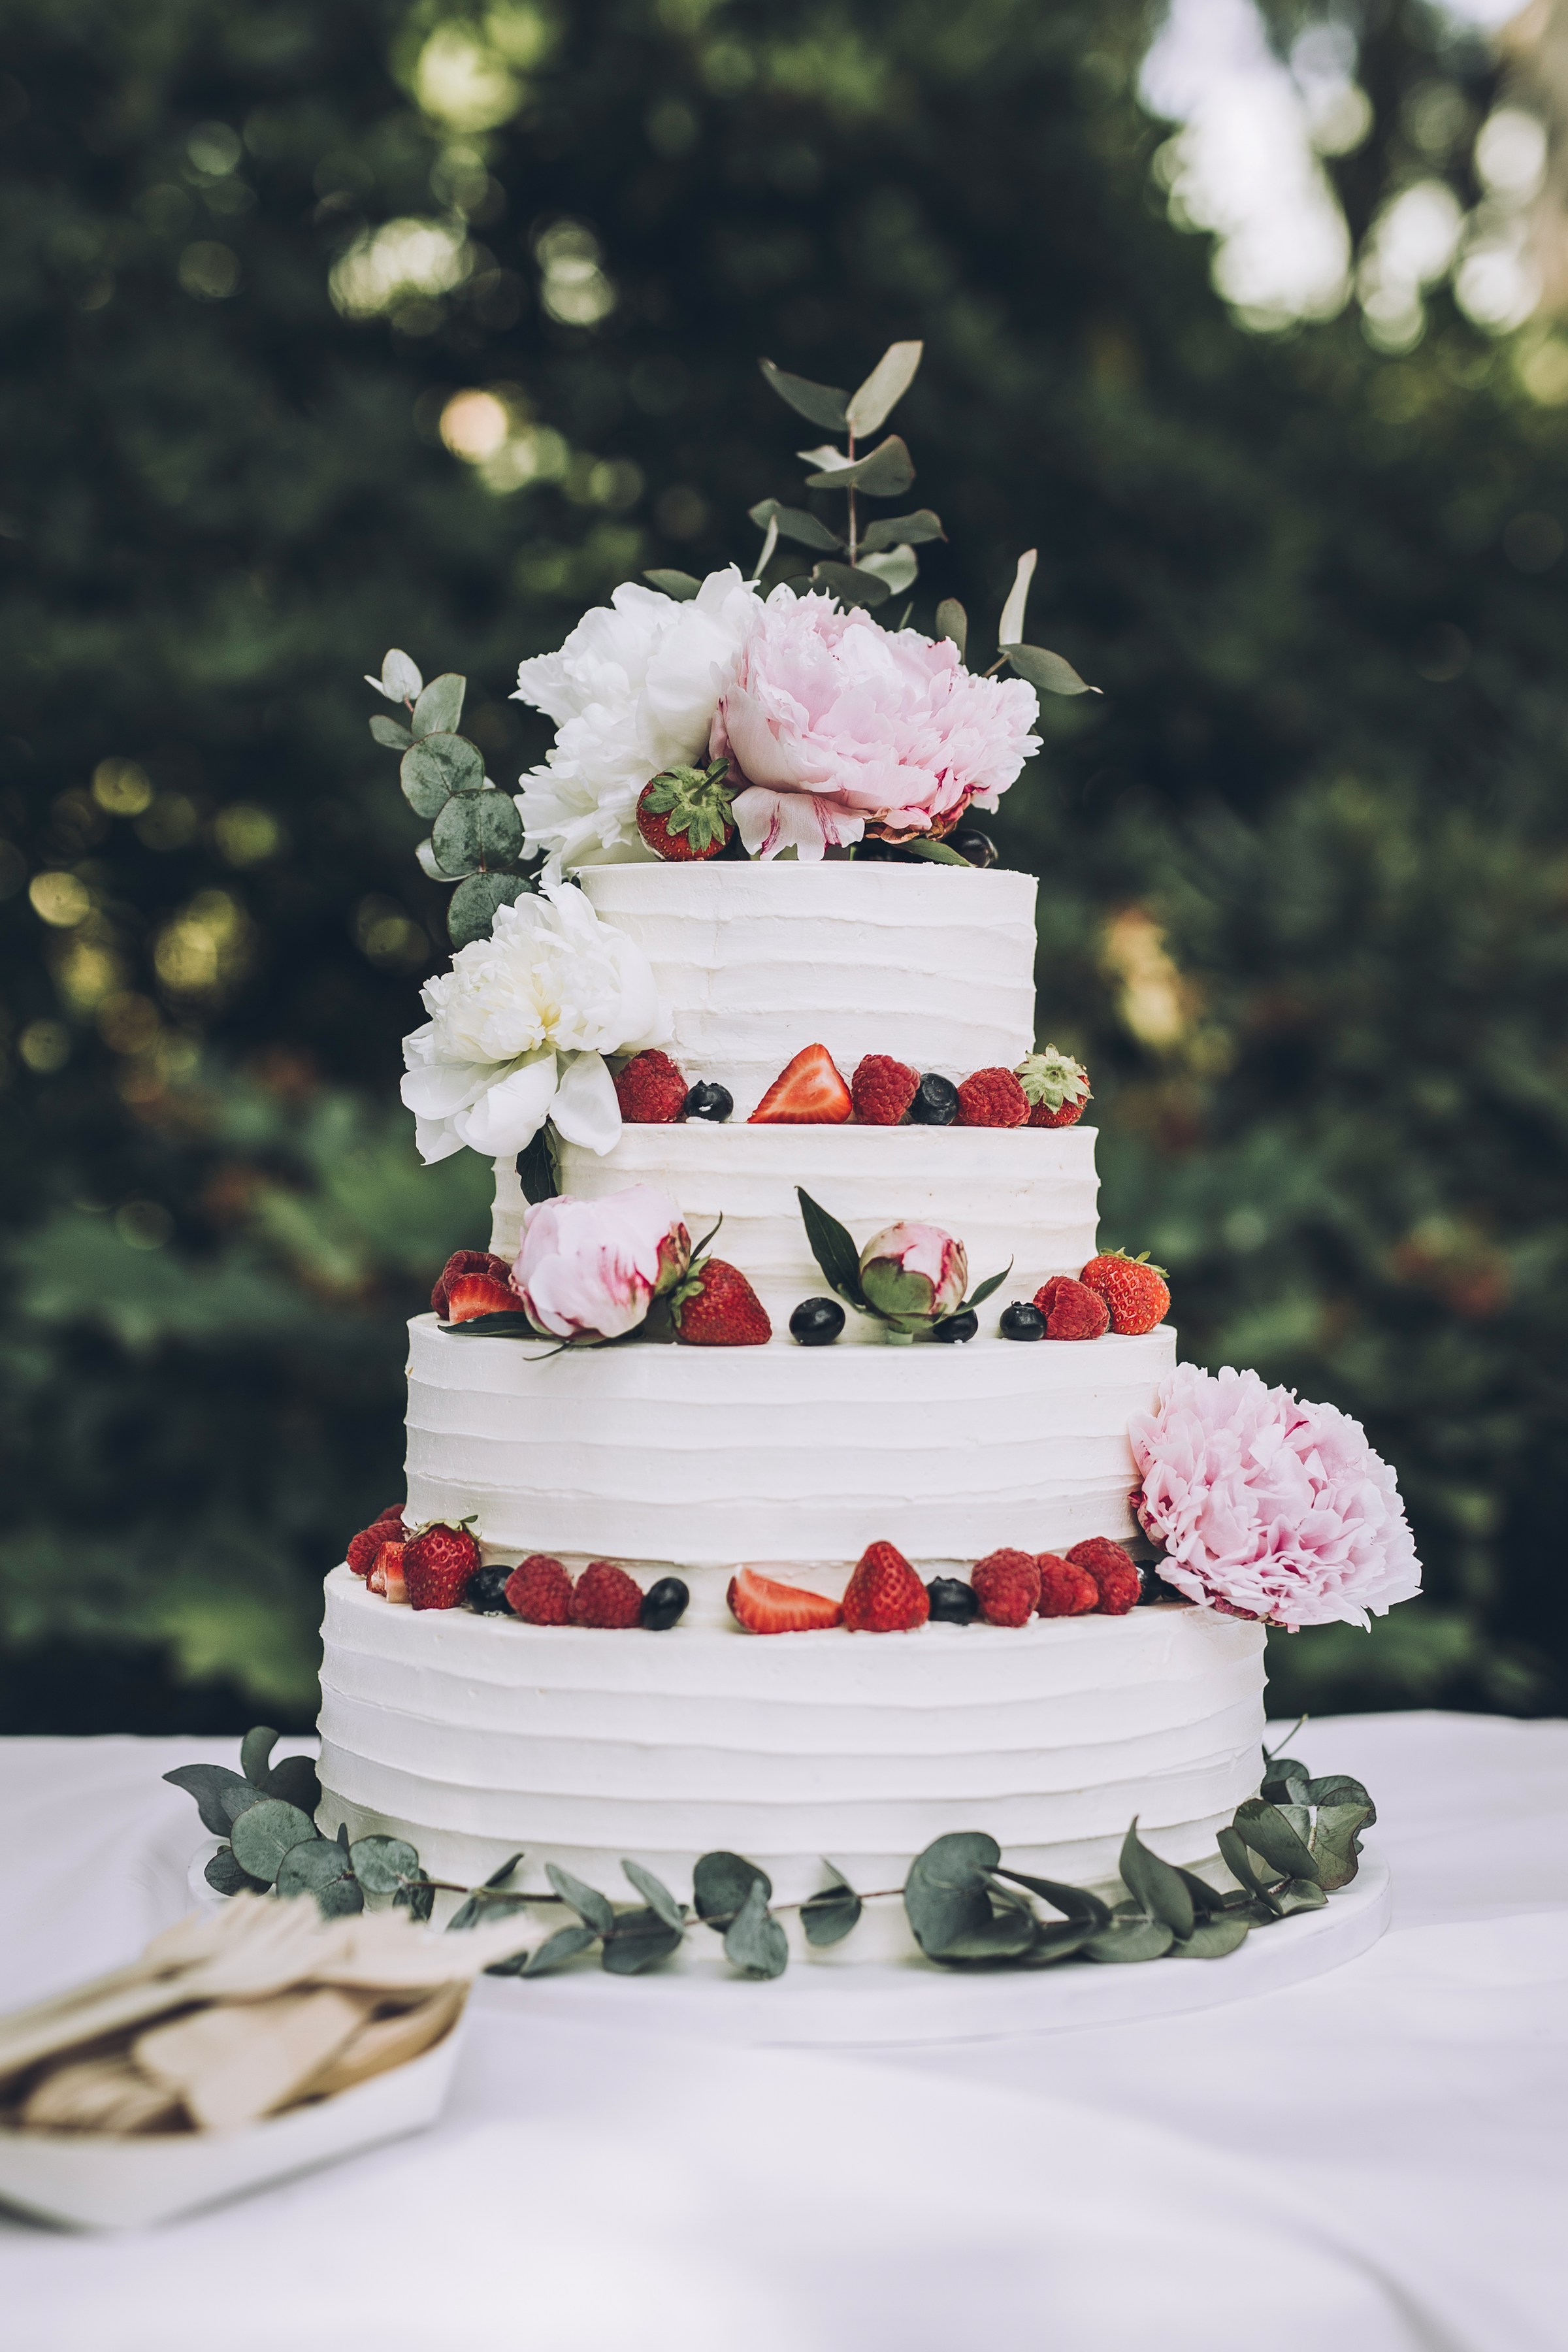 A white wedding cake with fruit | Source: Unsplash